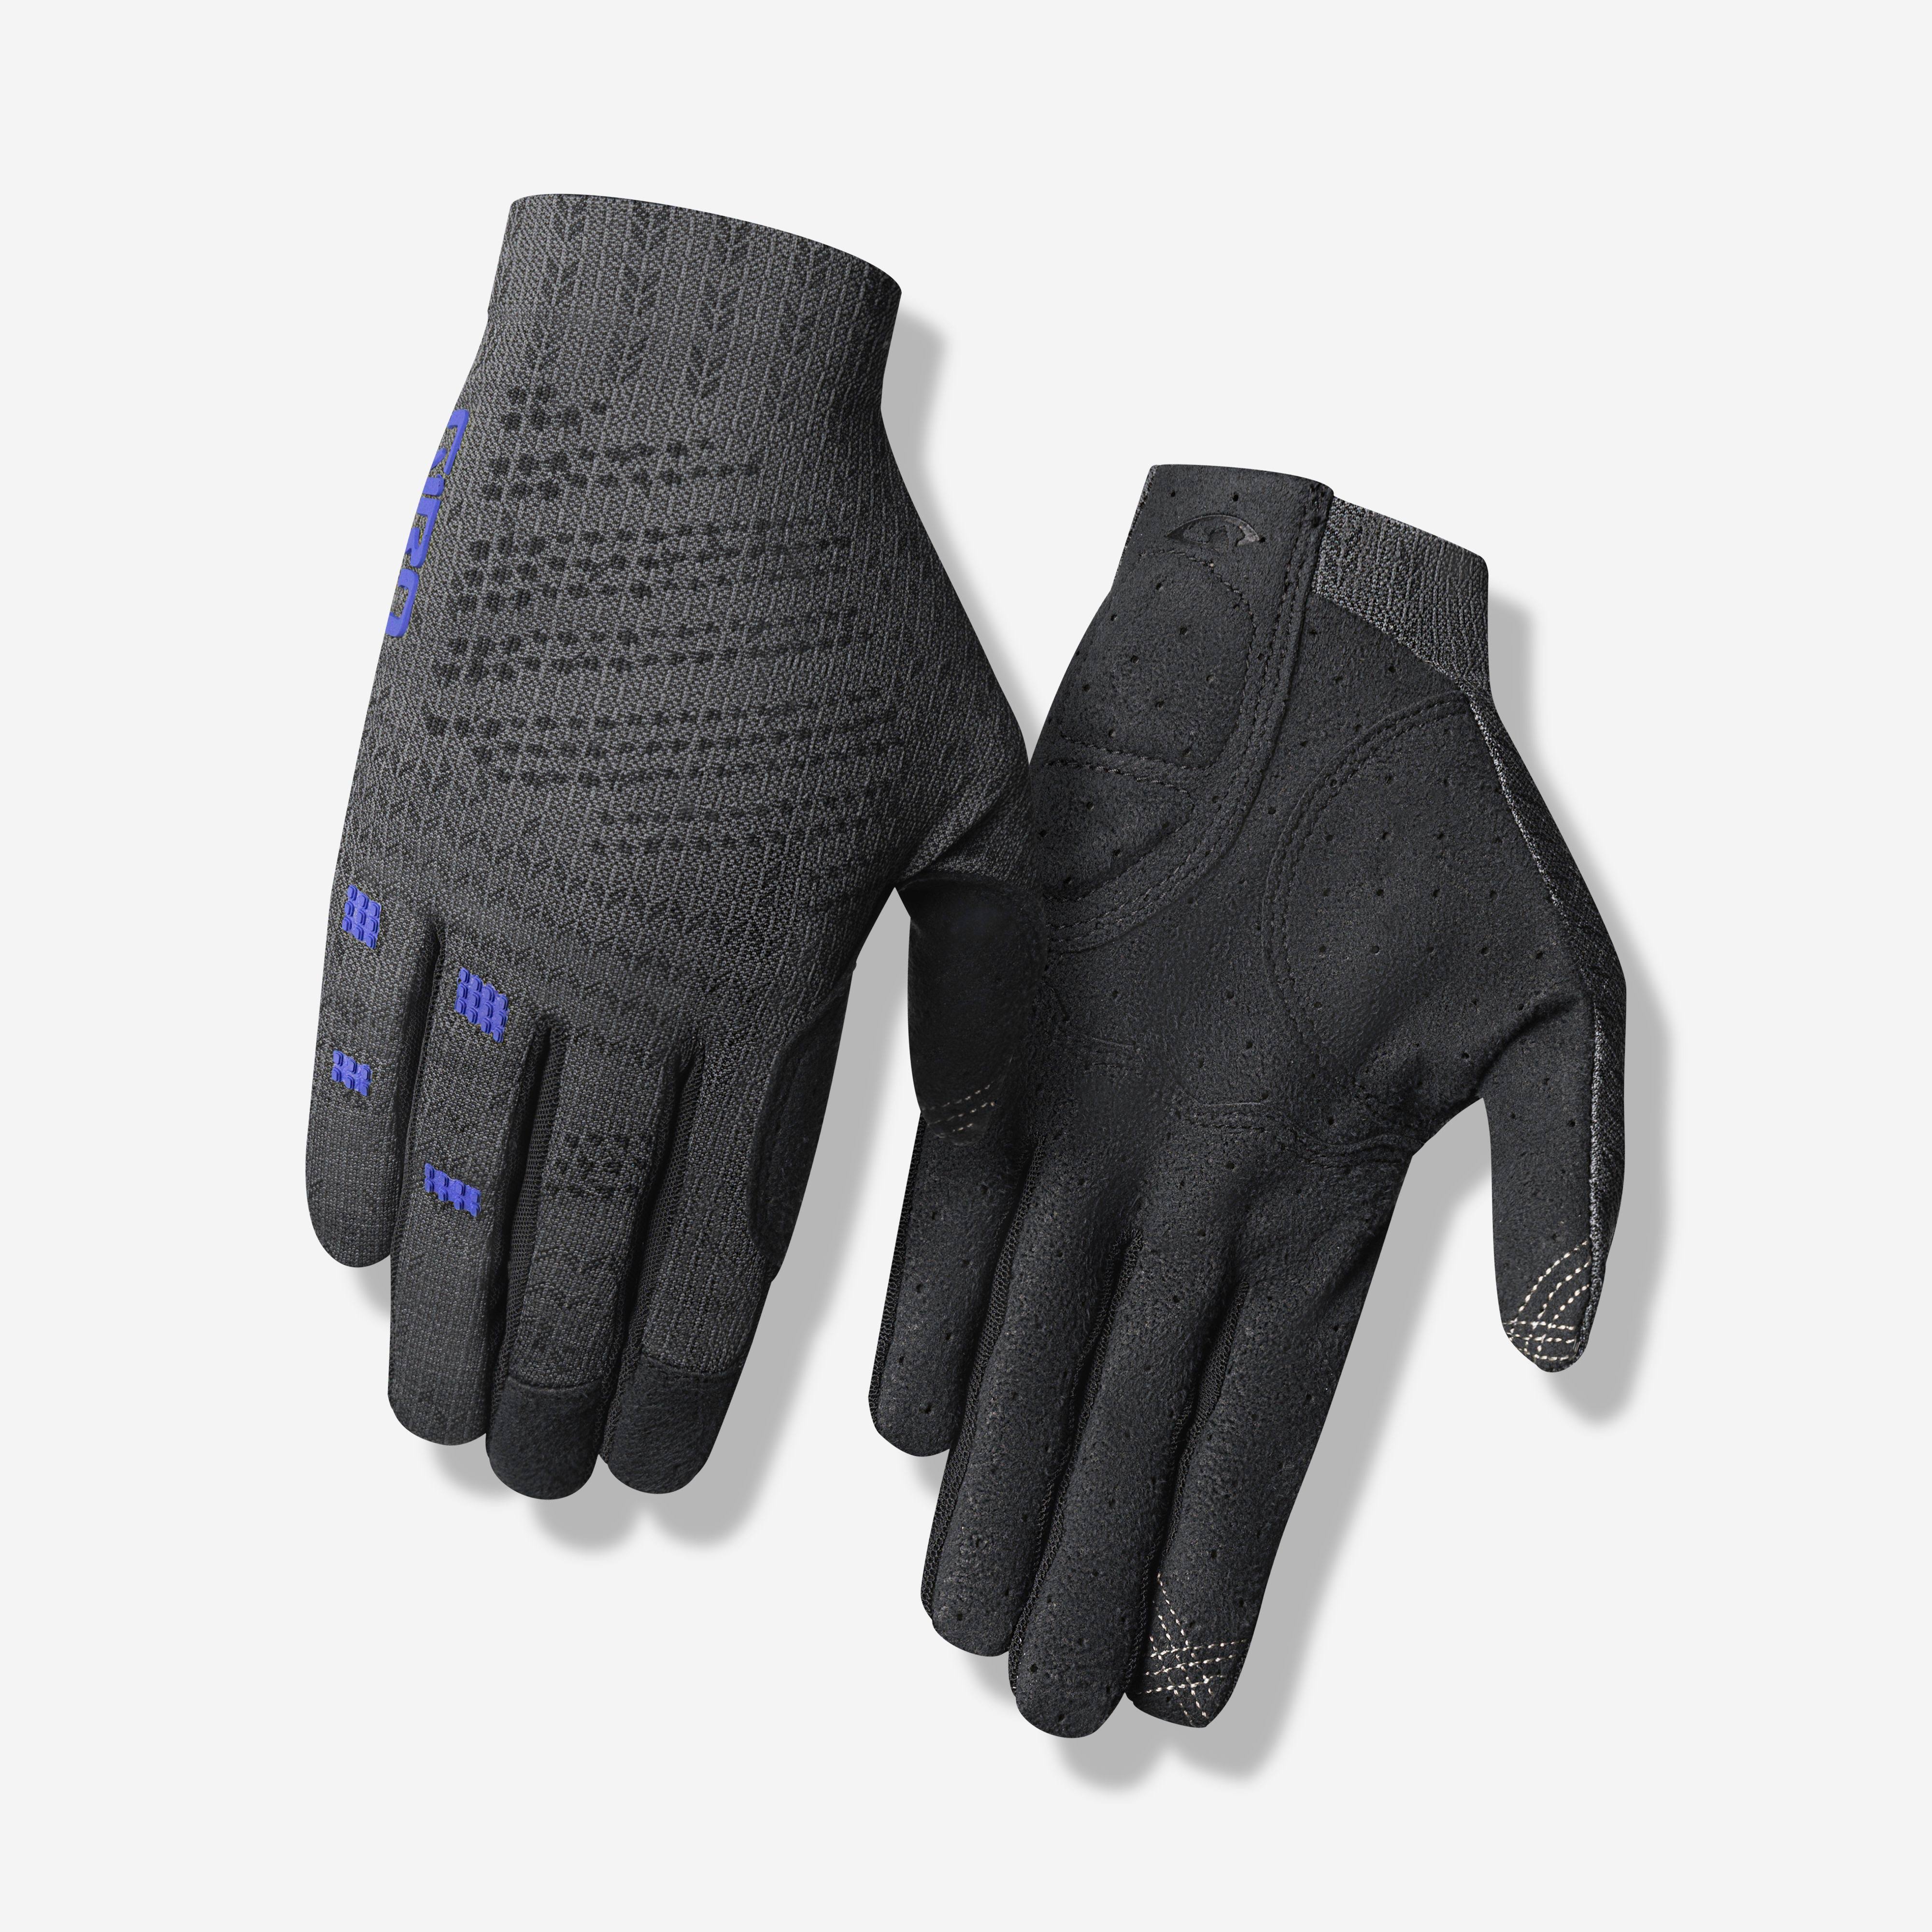 Giro Women's Xnetic Trail Glove - Medium - Titanium/Electric Purple